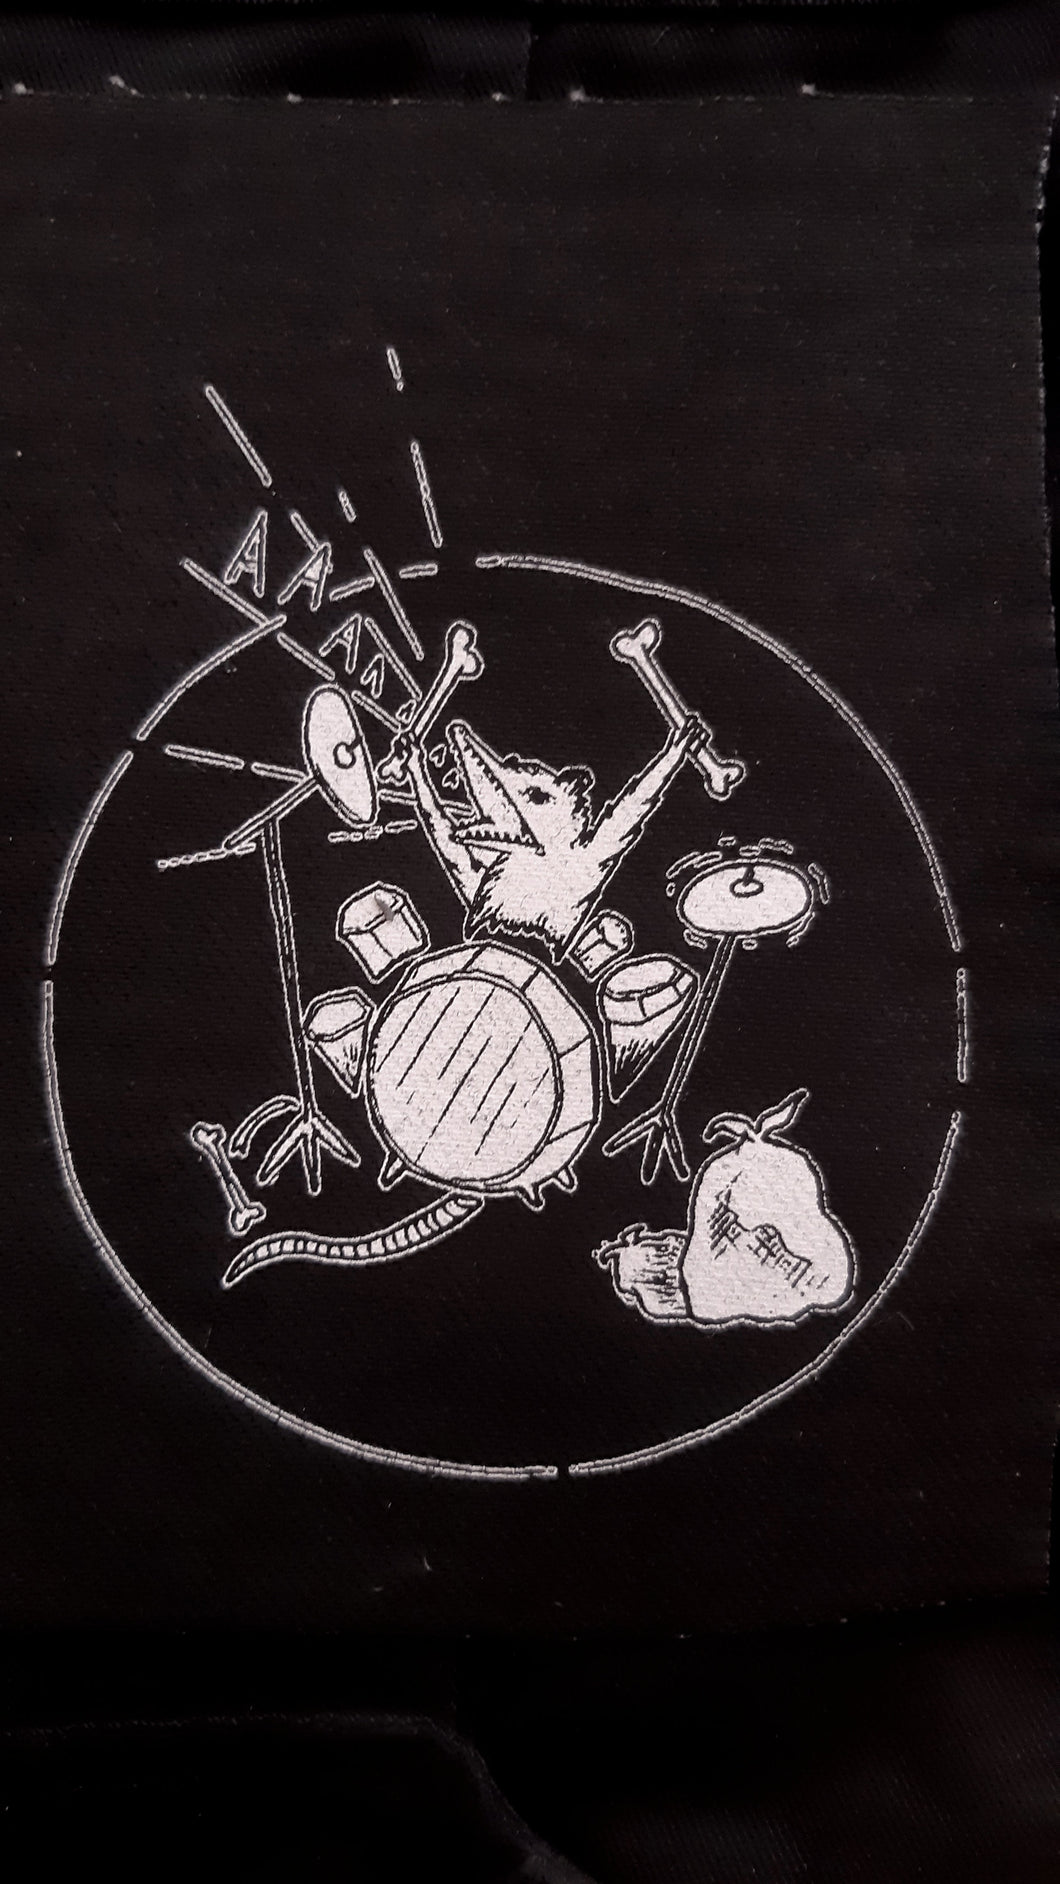 Punk drummer trash opossum patch  - Screen printing on black fabric